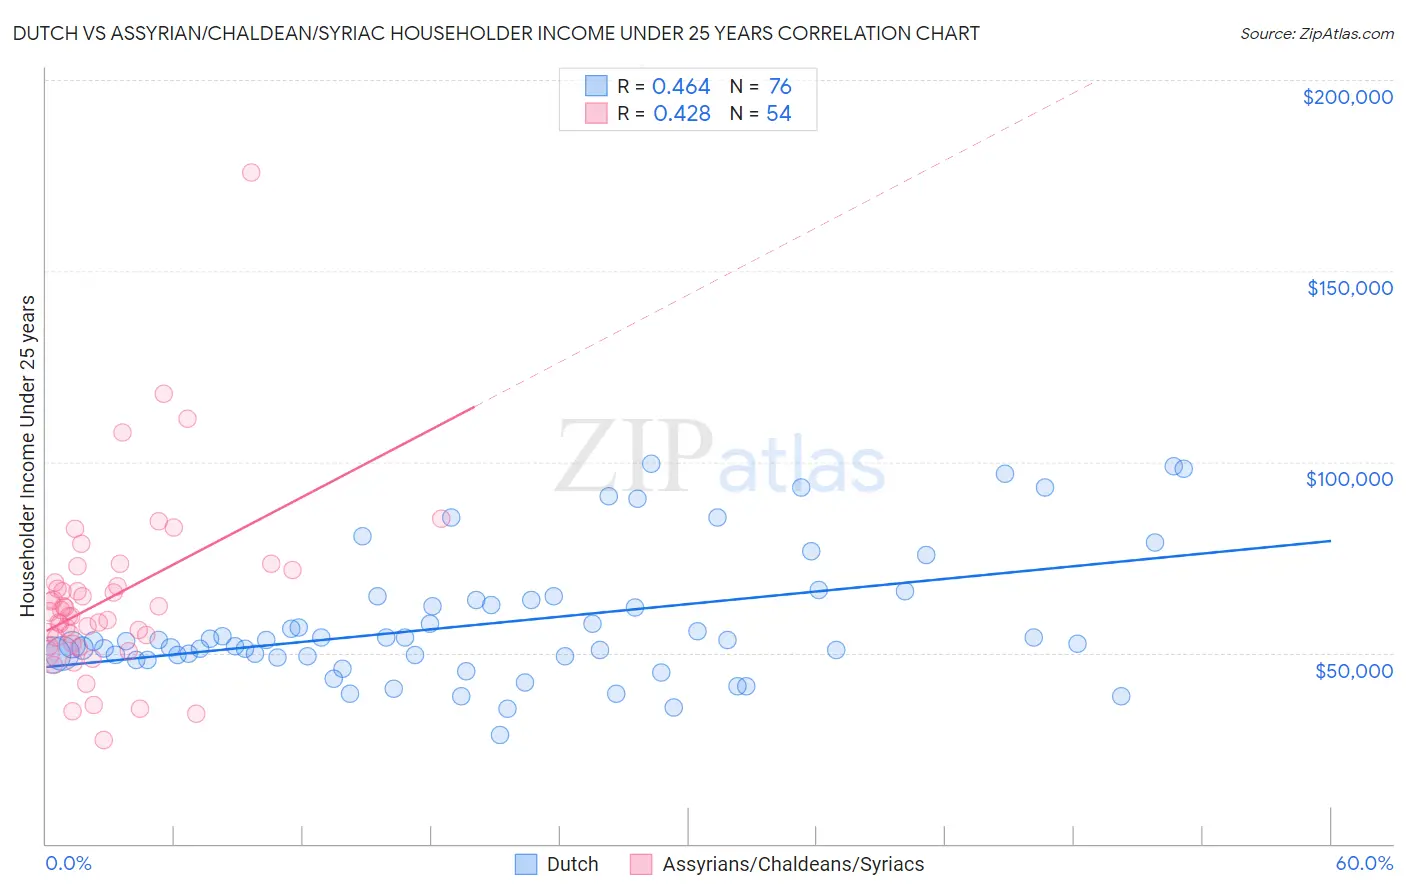 Dutch vs Assyrian/Chaldean/Syriac Householder Income Under 25 years